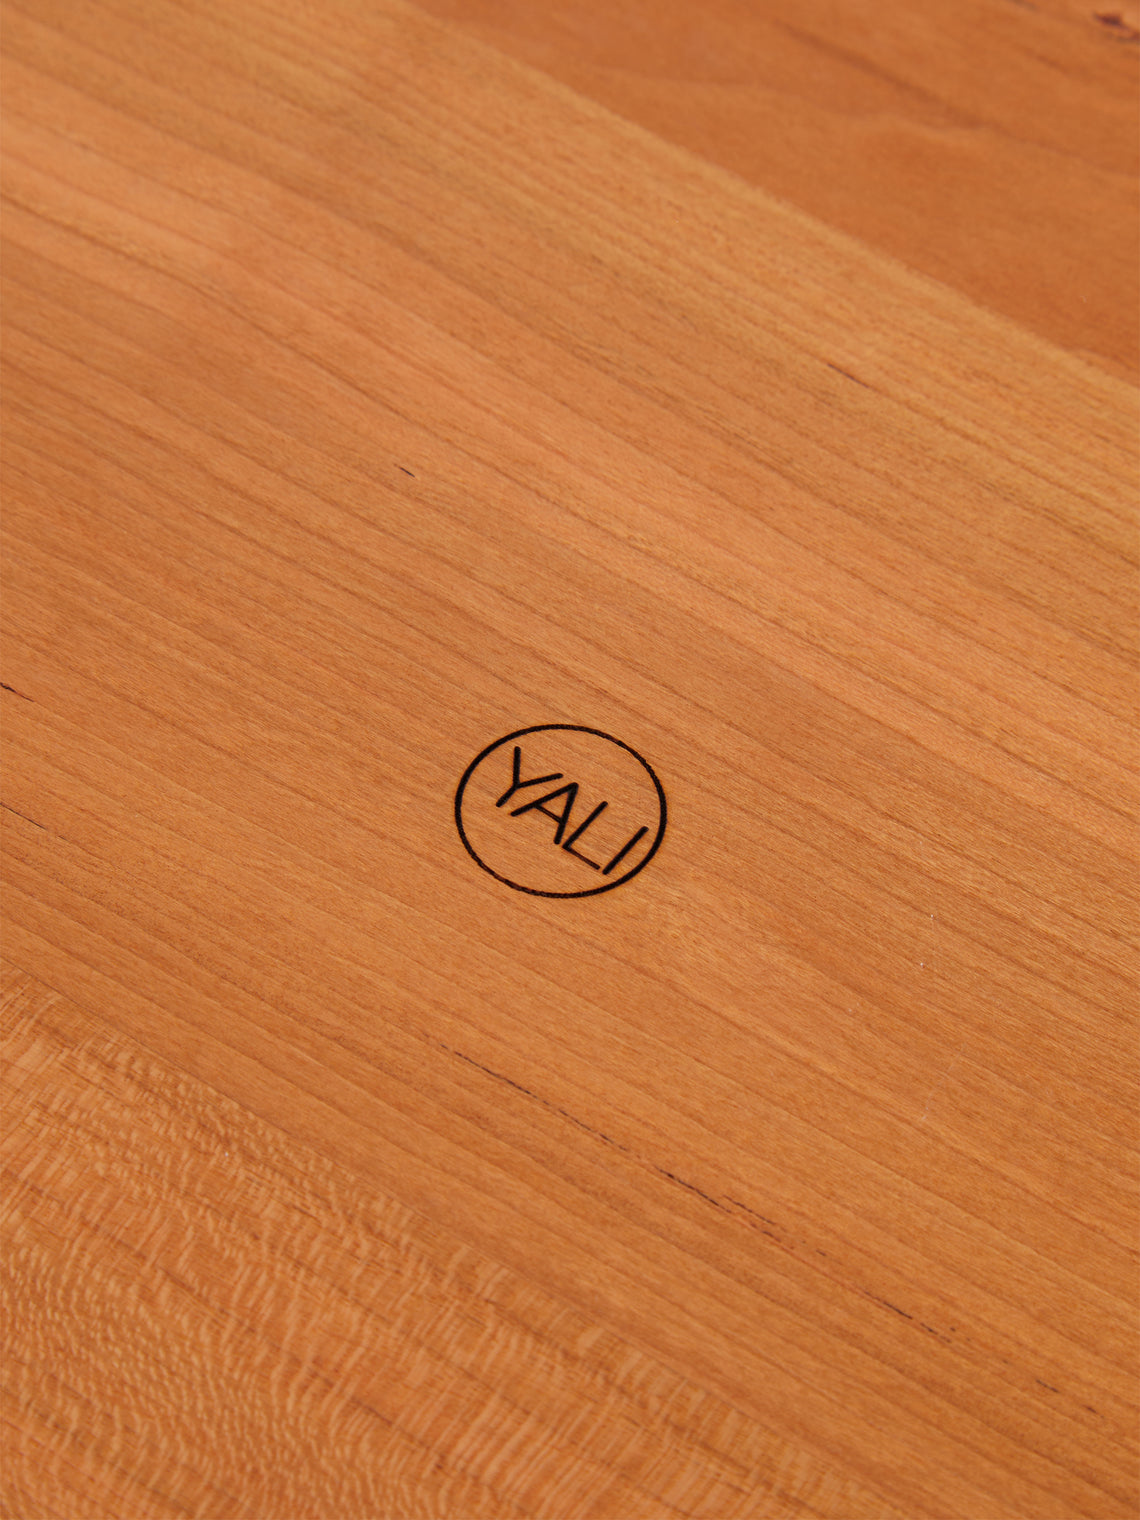 Yali Glass - Moribana Cherry Wood Large Tray -  - ABASK